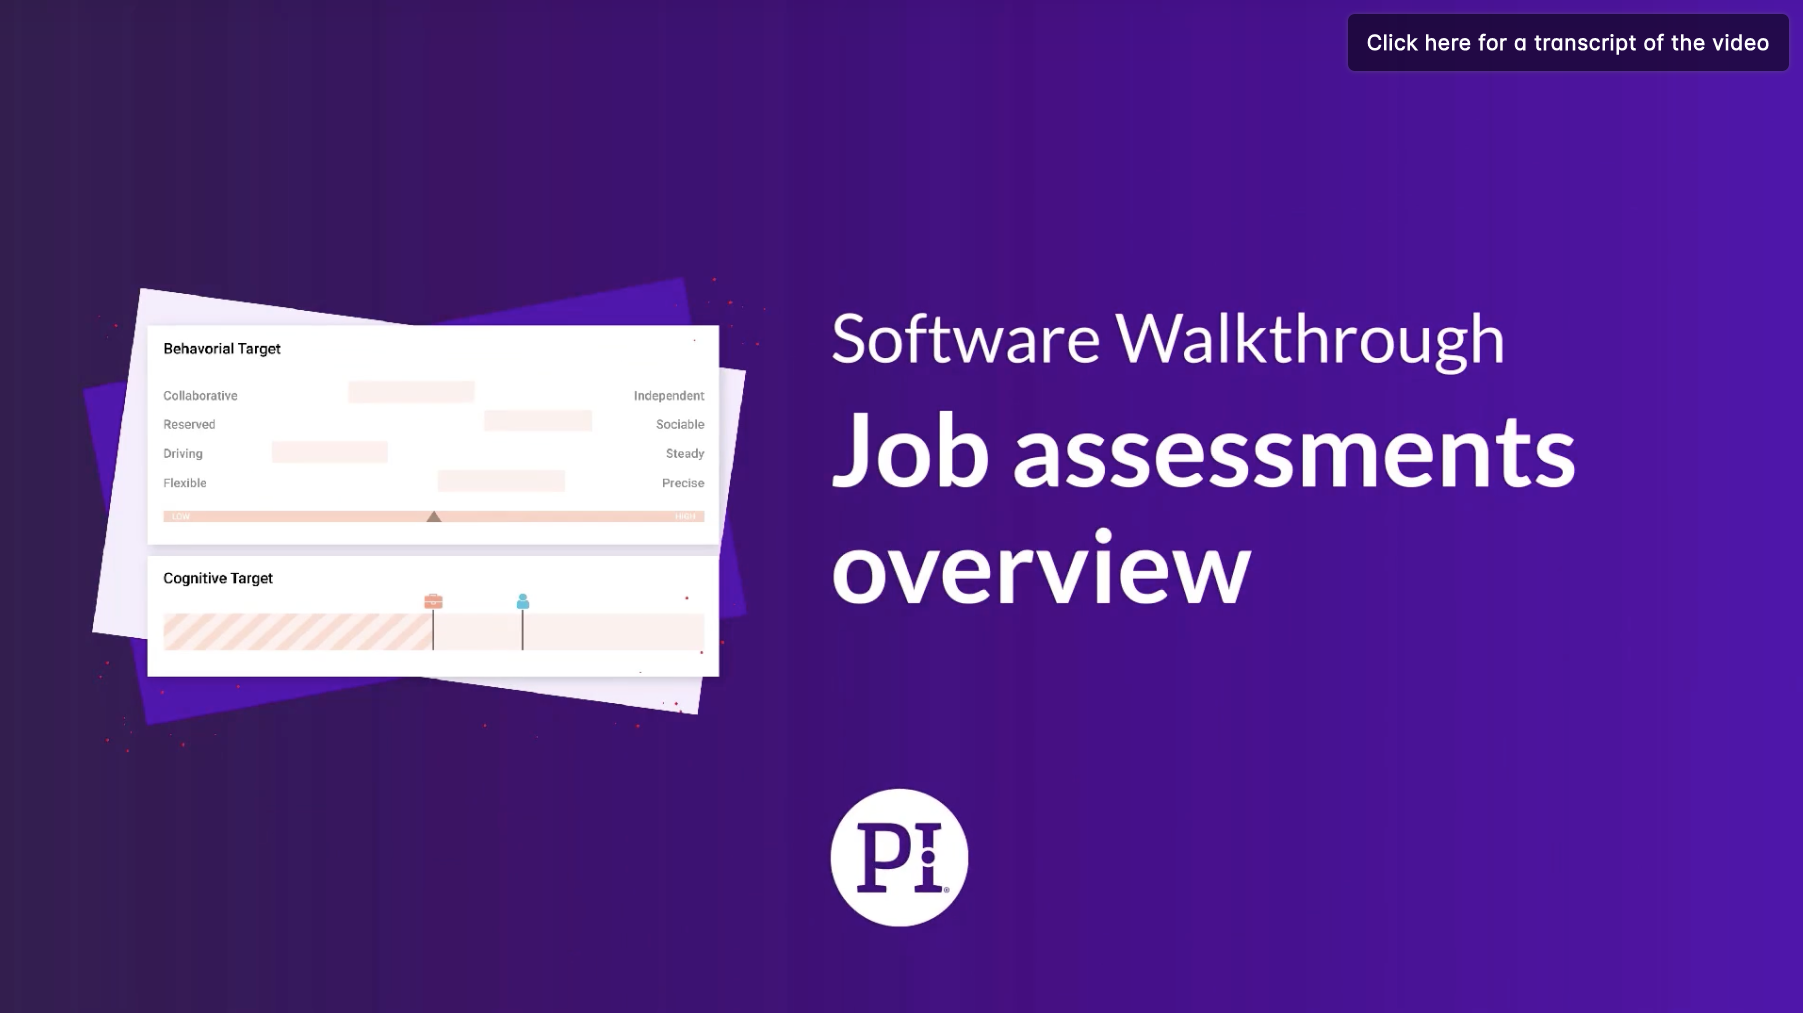 PI Job assessments overview